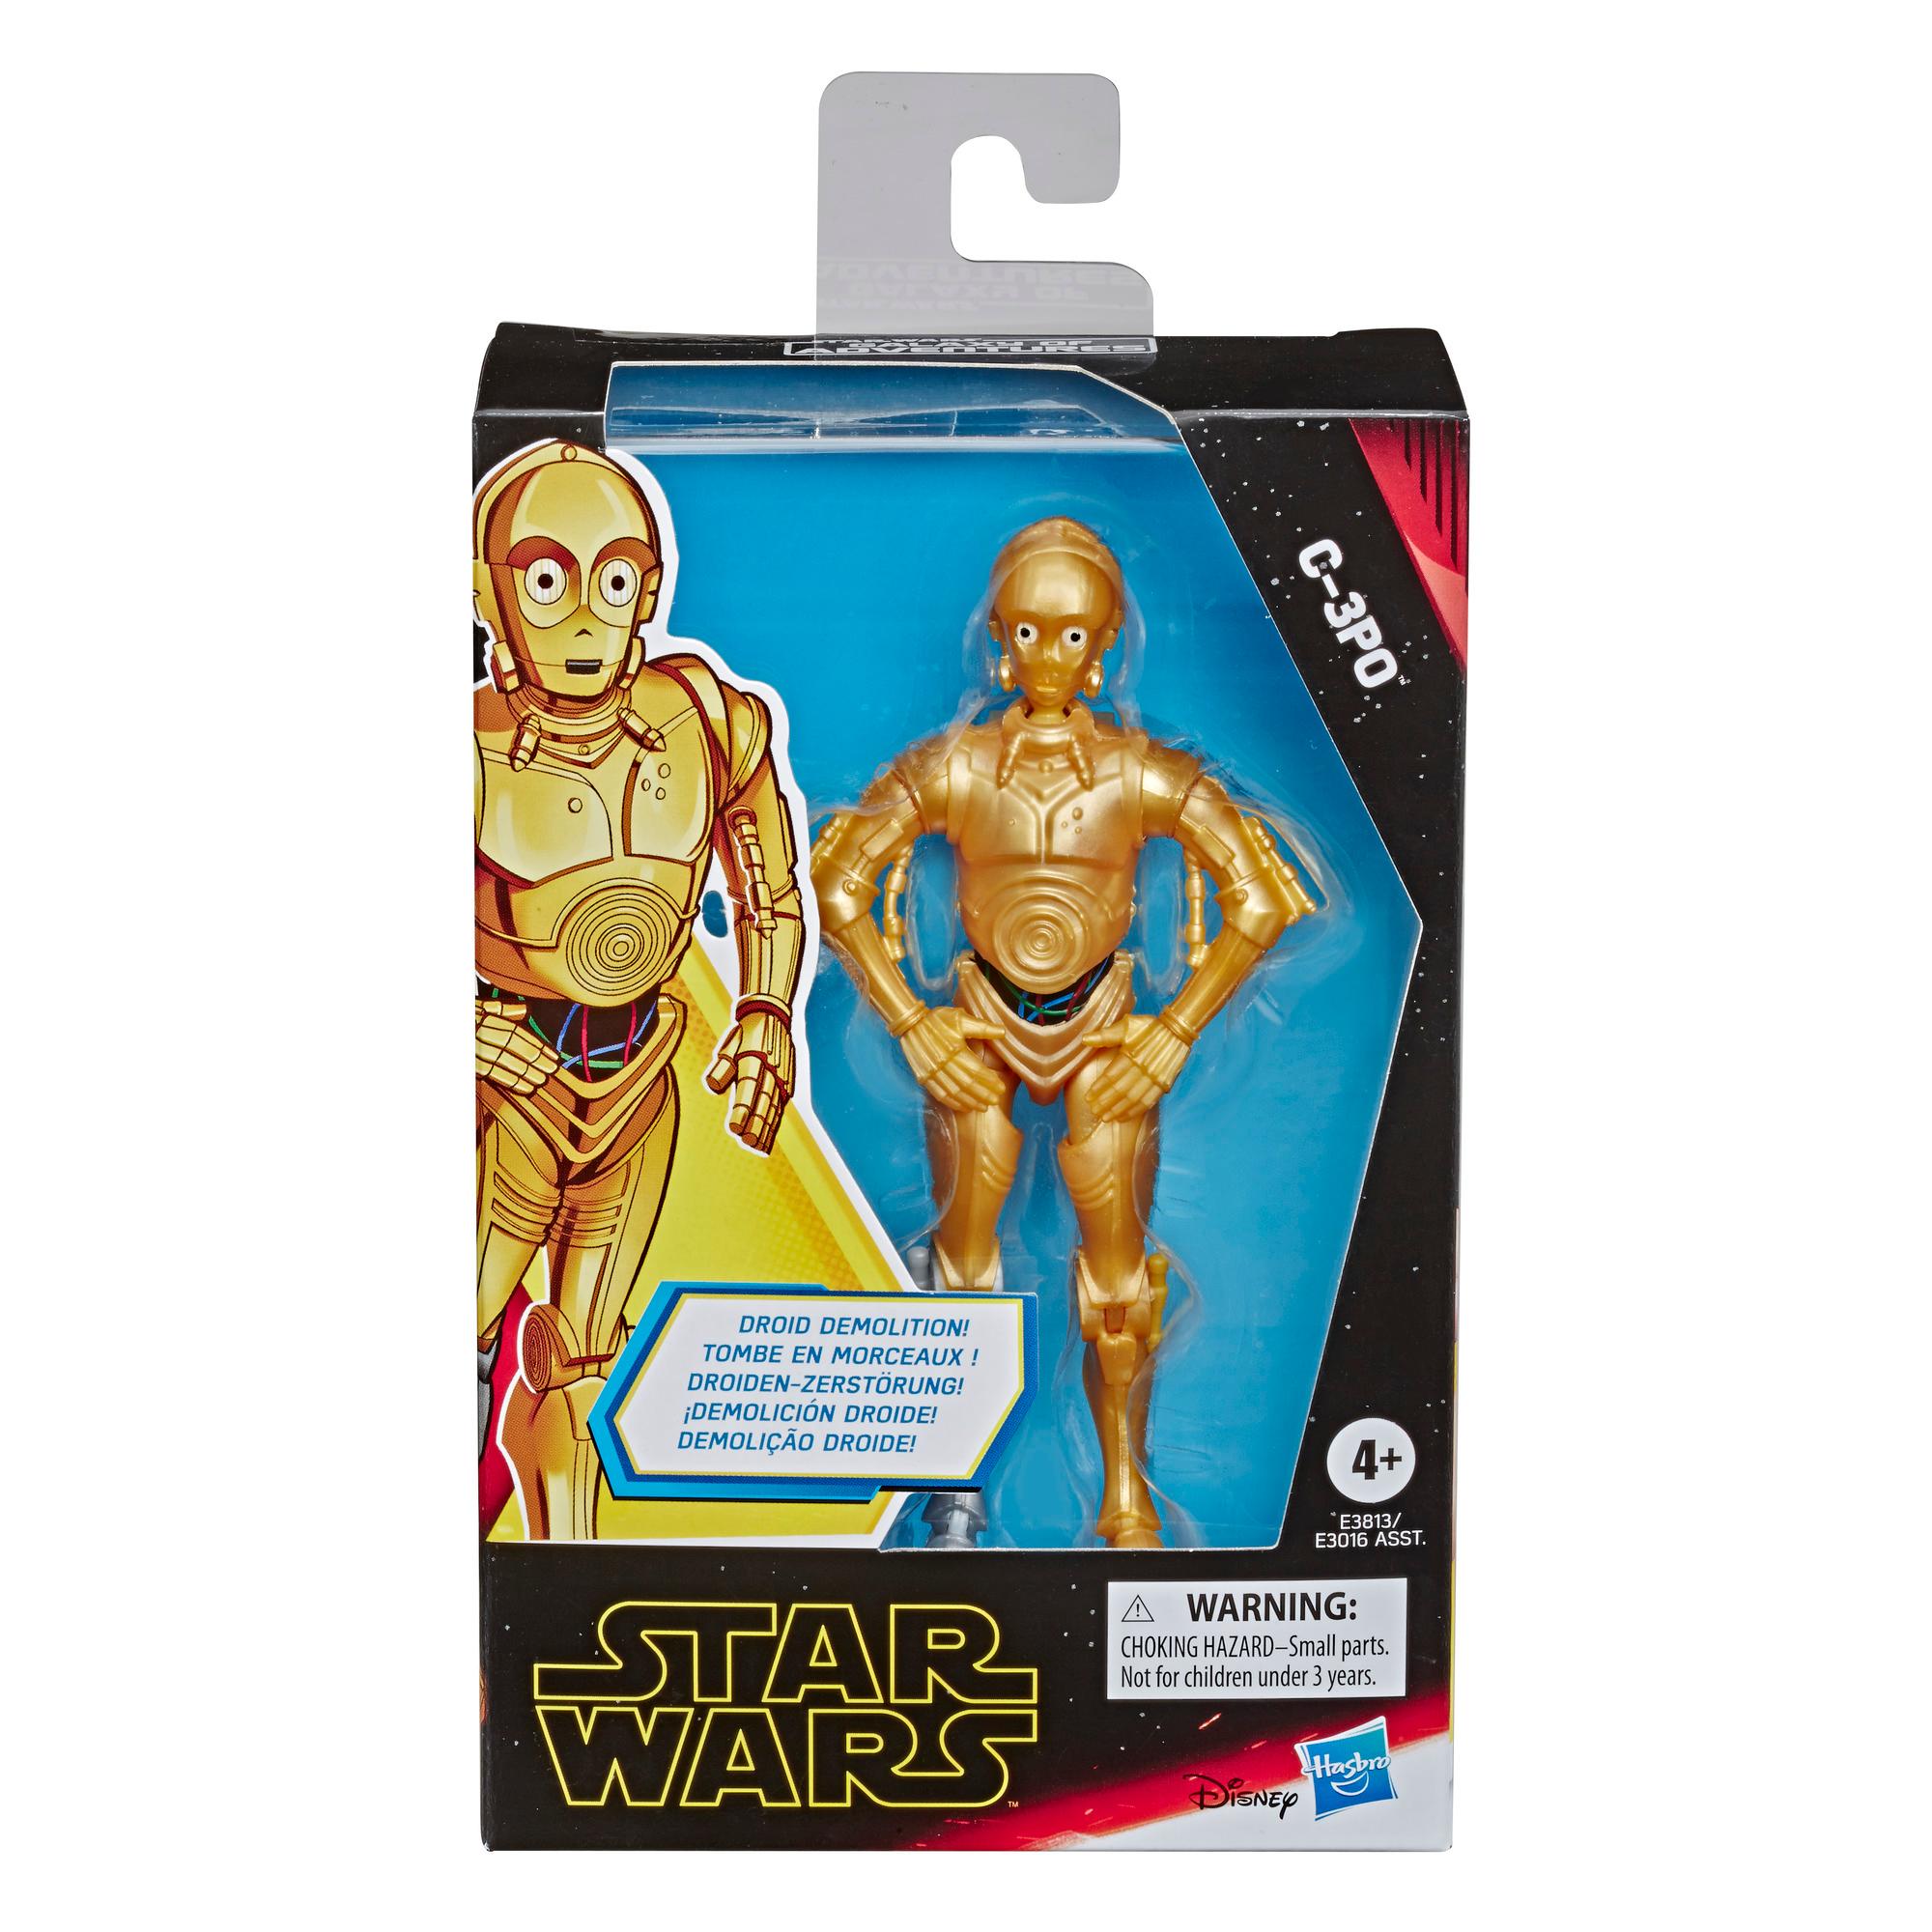 Star Wars Galaxy of Adventures C-3PO Toy Action Figure | Star Wars